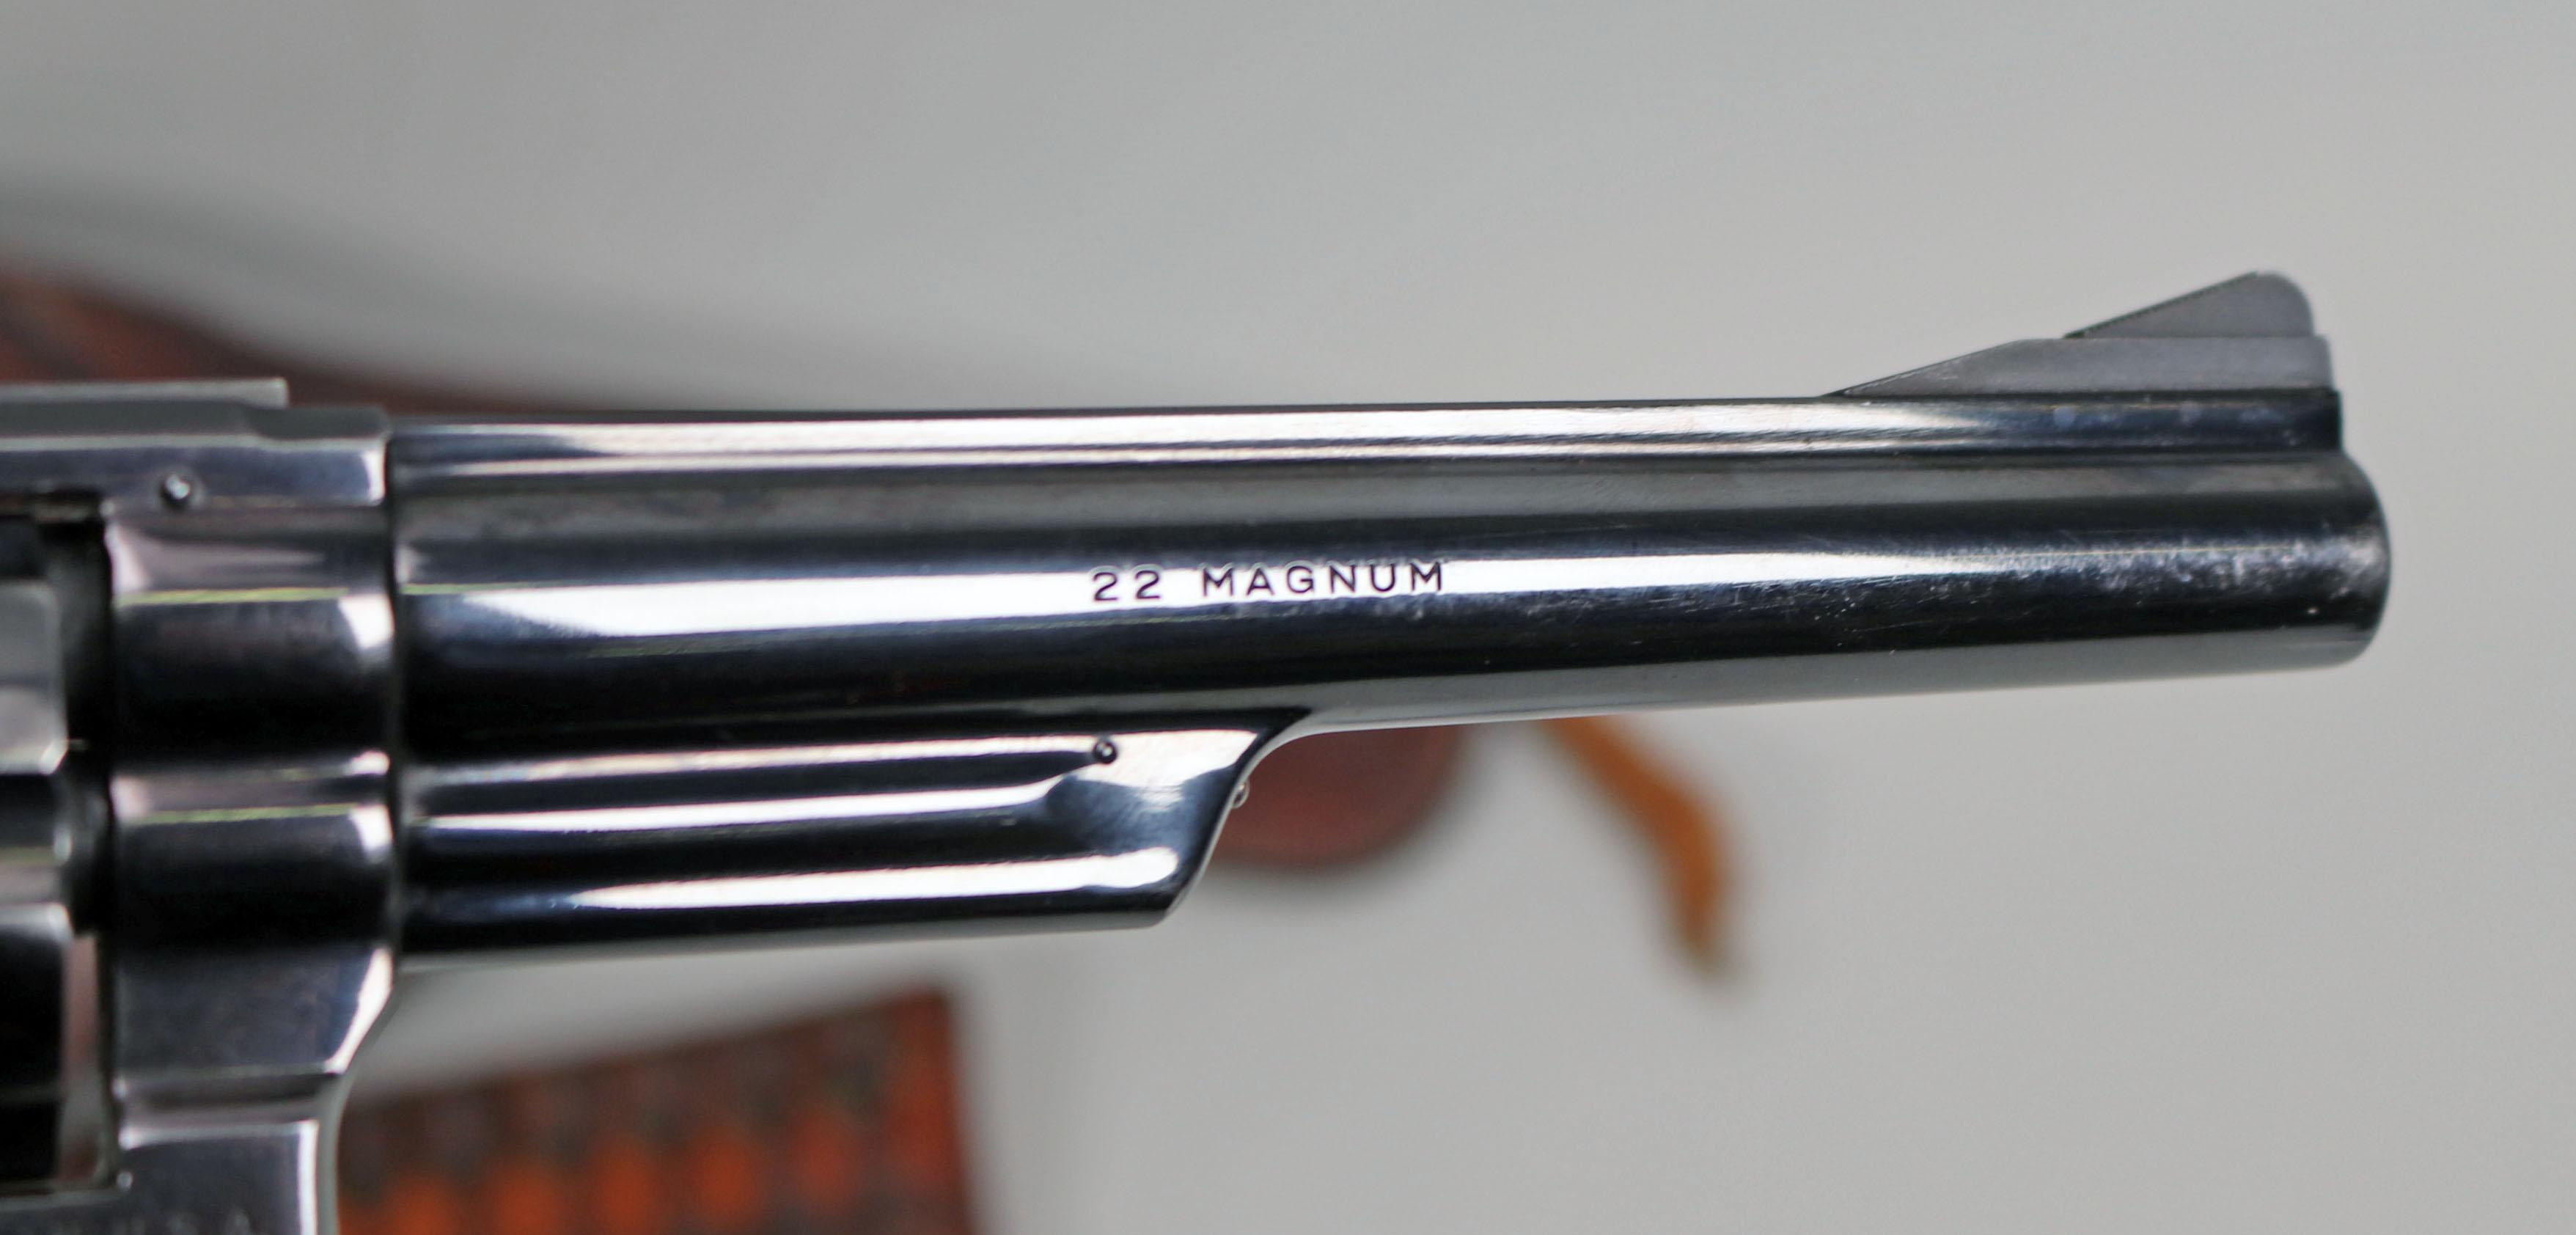 S&W Model 53 ".22 Rem Jet" Revolver w/ Ammo & Holster, Ca. 1961